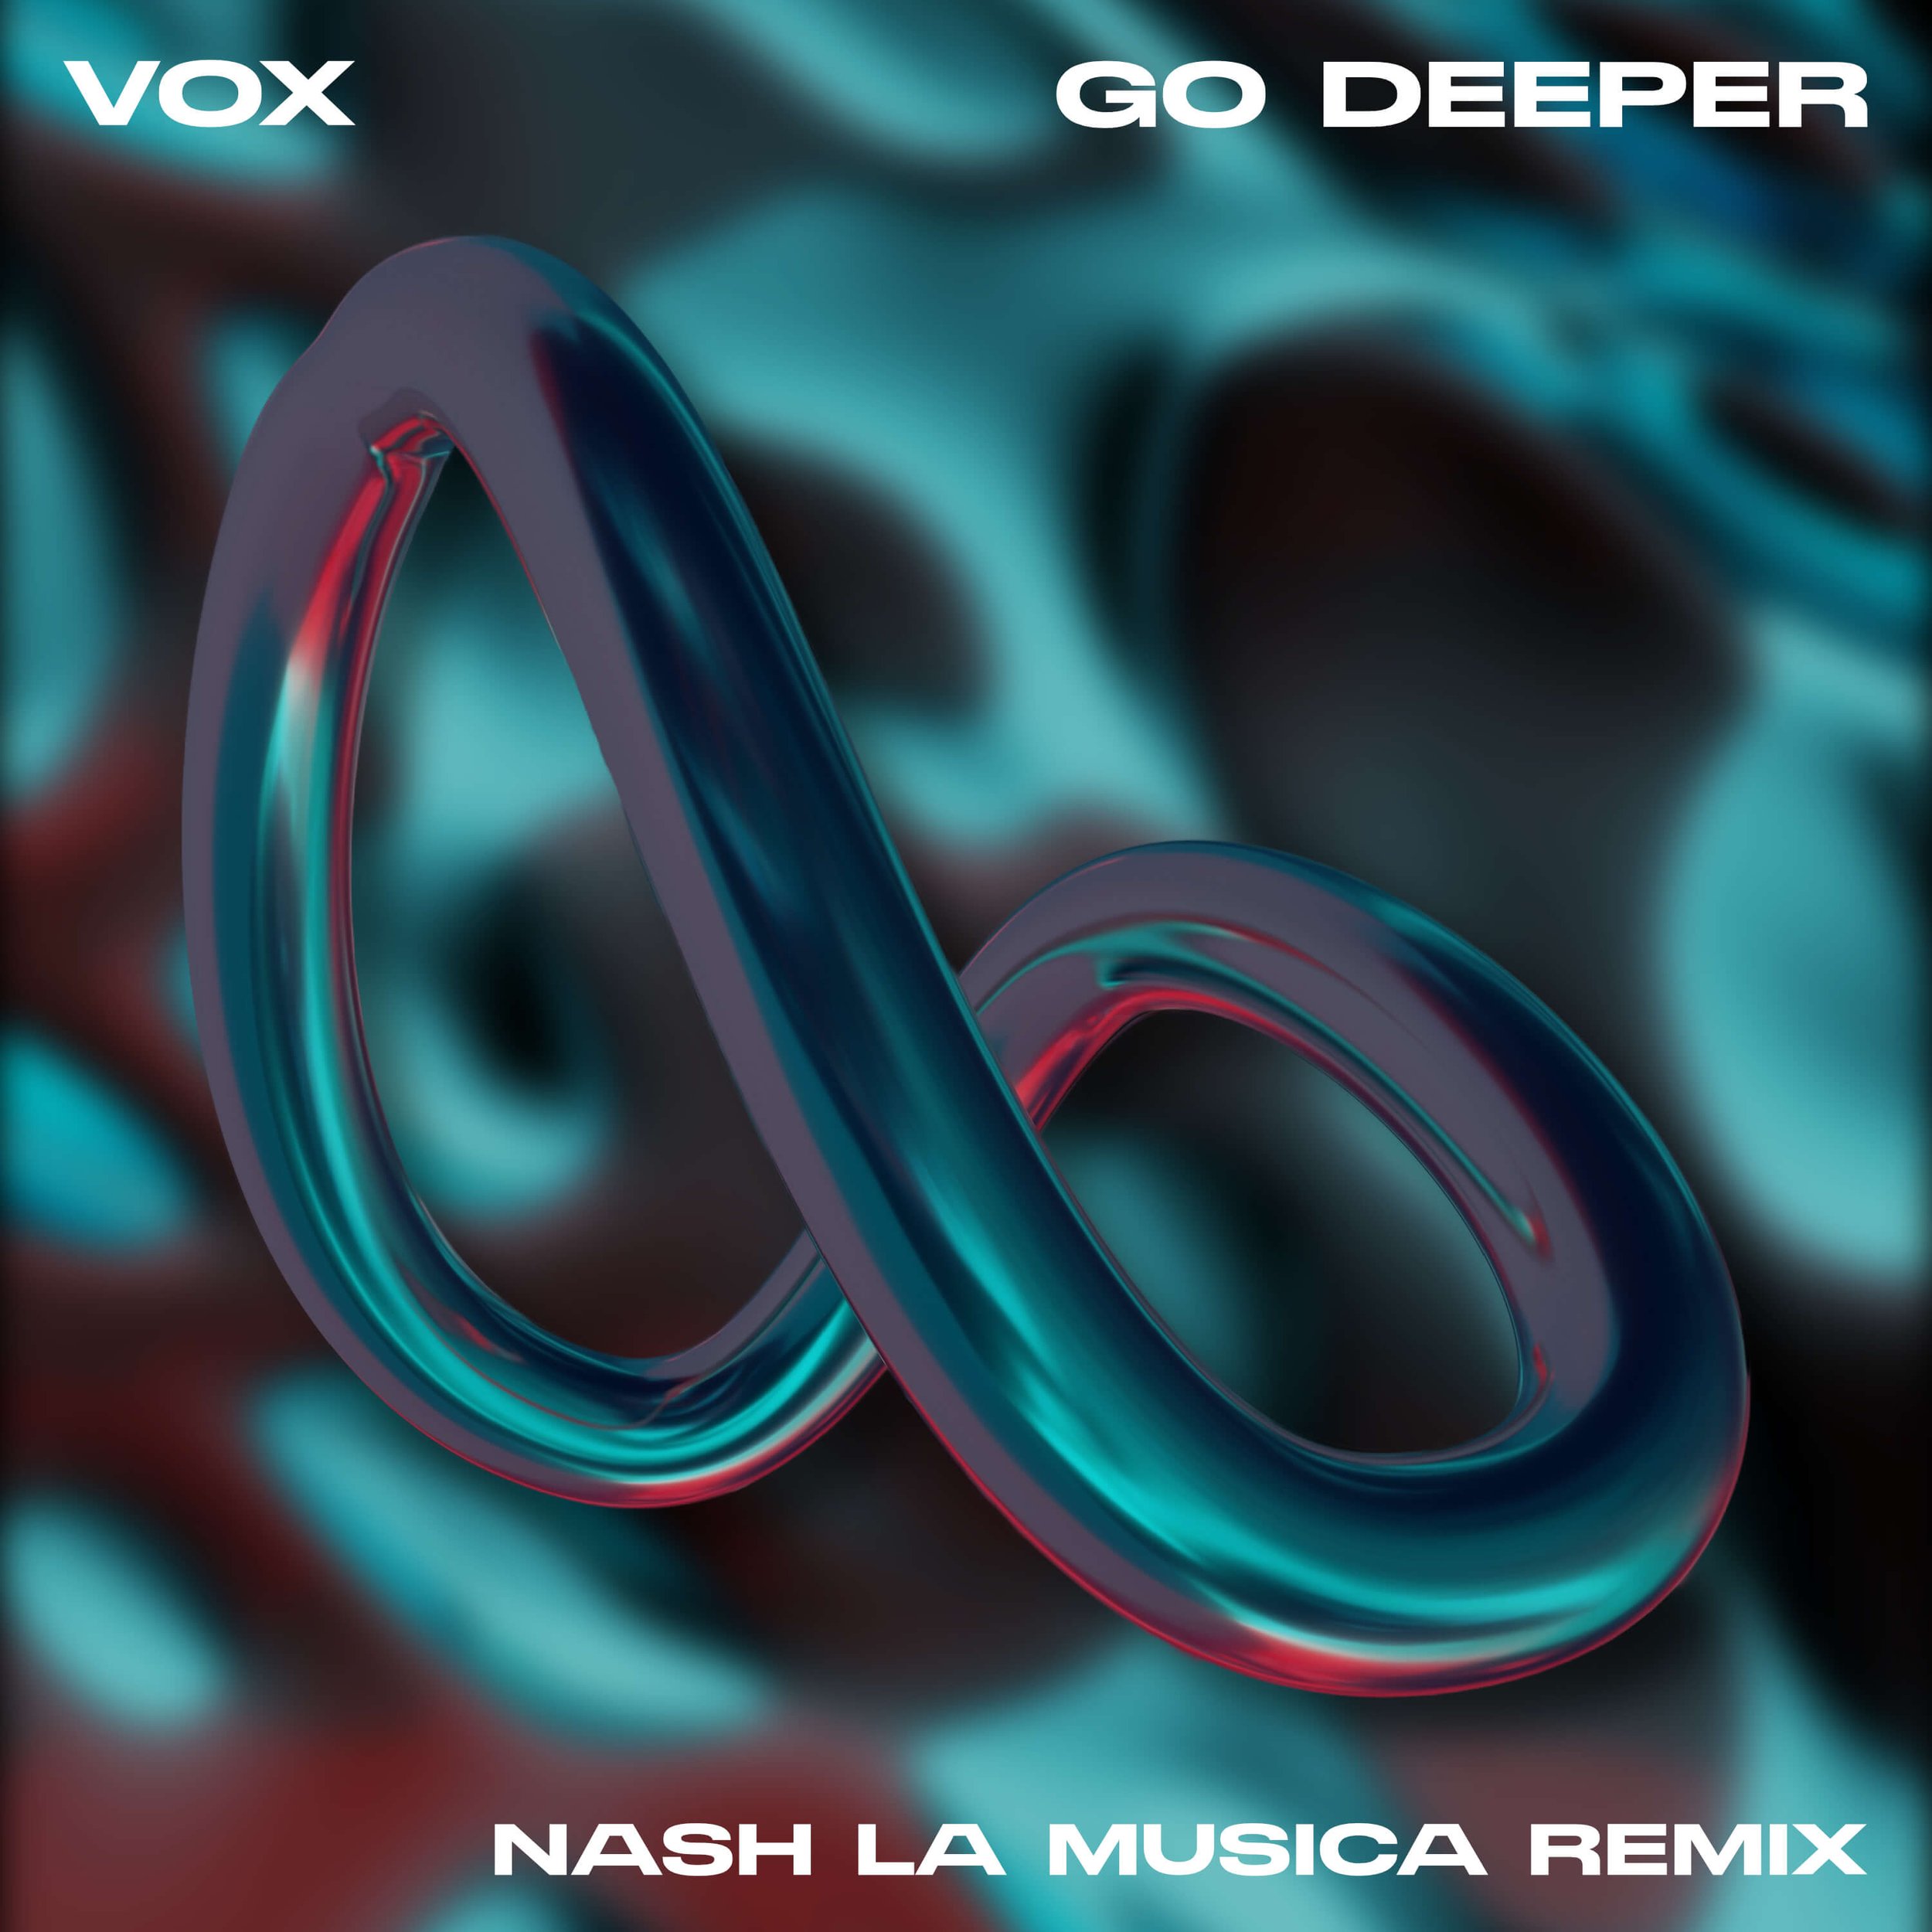 Nash La Musica - Go Deeper ft. Vox (Nash La Musica Remix) [Issa'min]